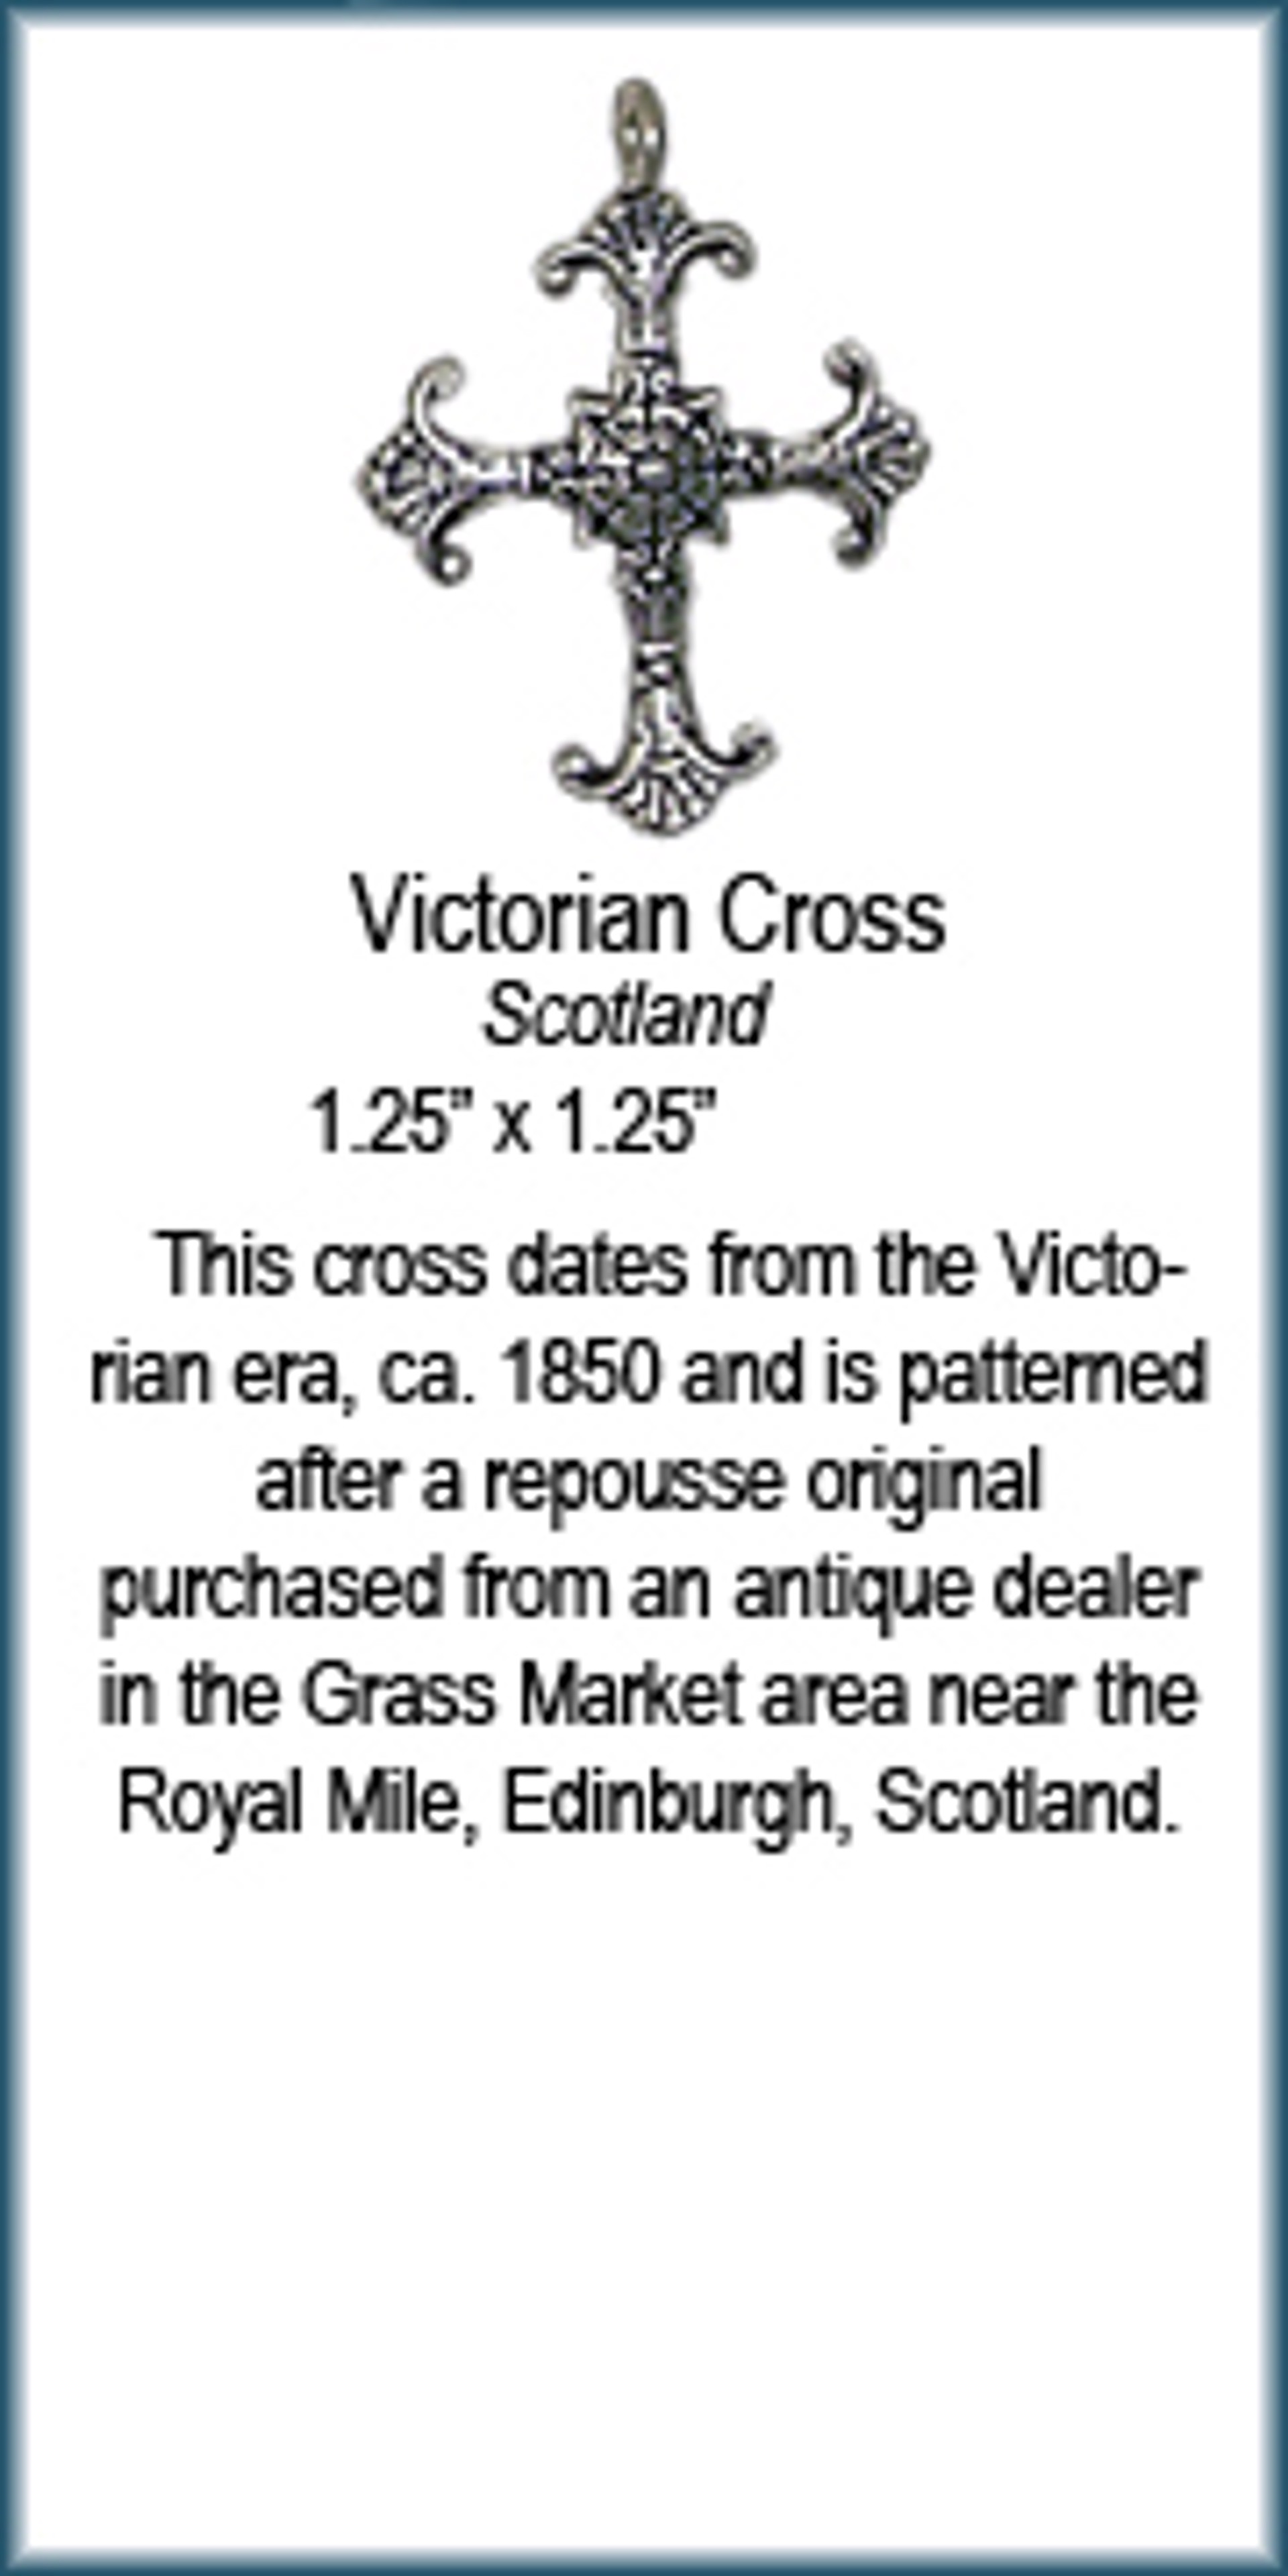 Pendant - Bronze Victorian Cross 8357 by Deanne McKeown